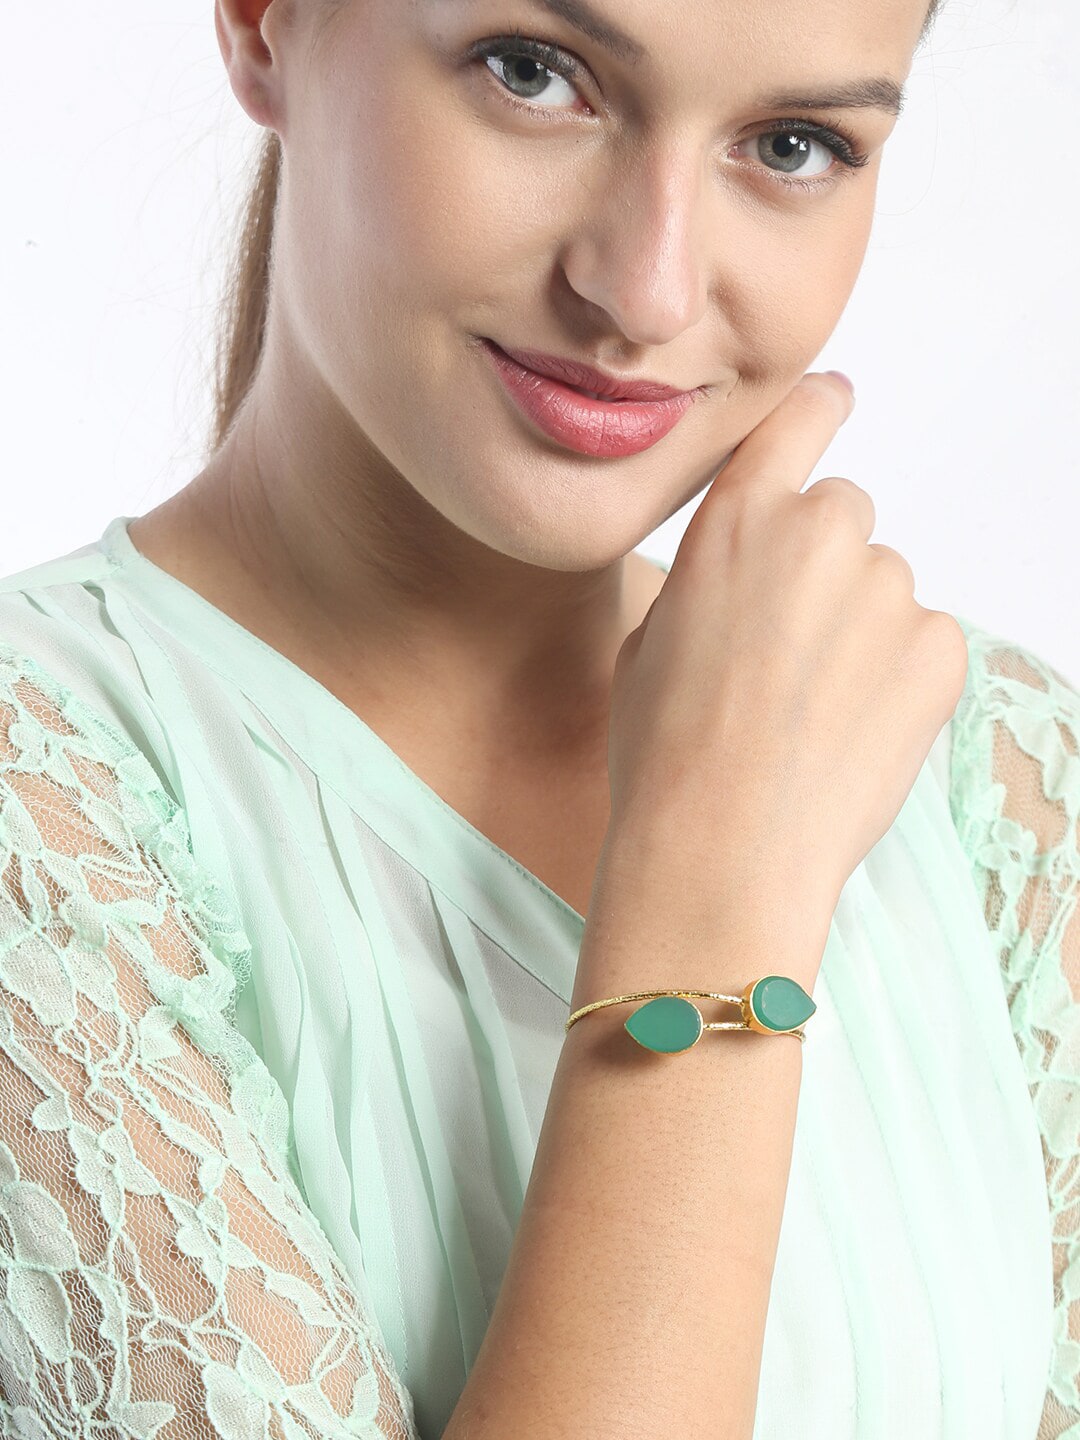 EL REGALO Women Green & Gold-Toned Brass Cuff Bracelet - for Women and Girls
Style ID: 17147904